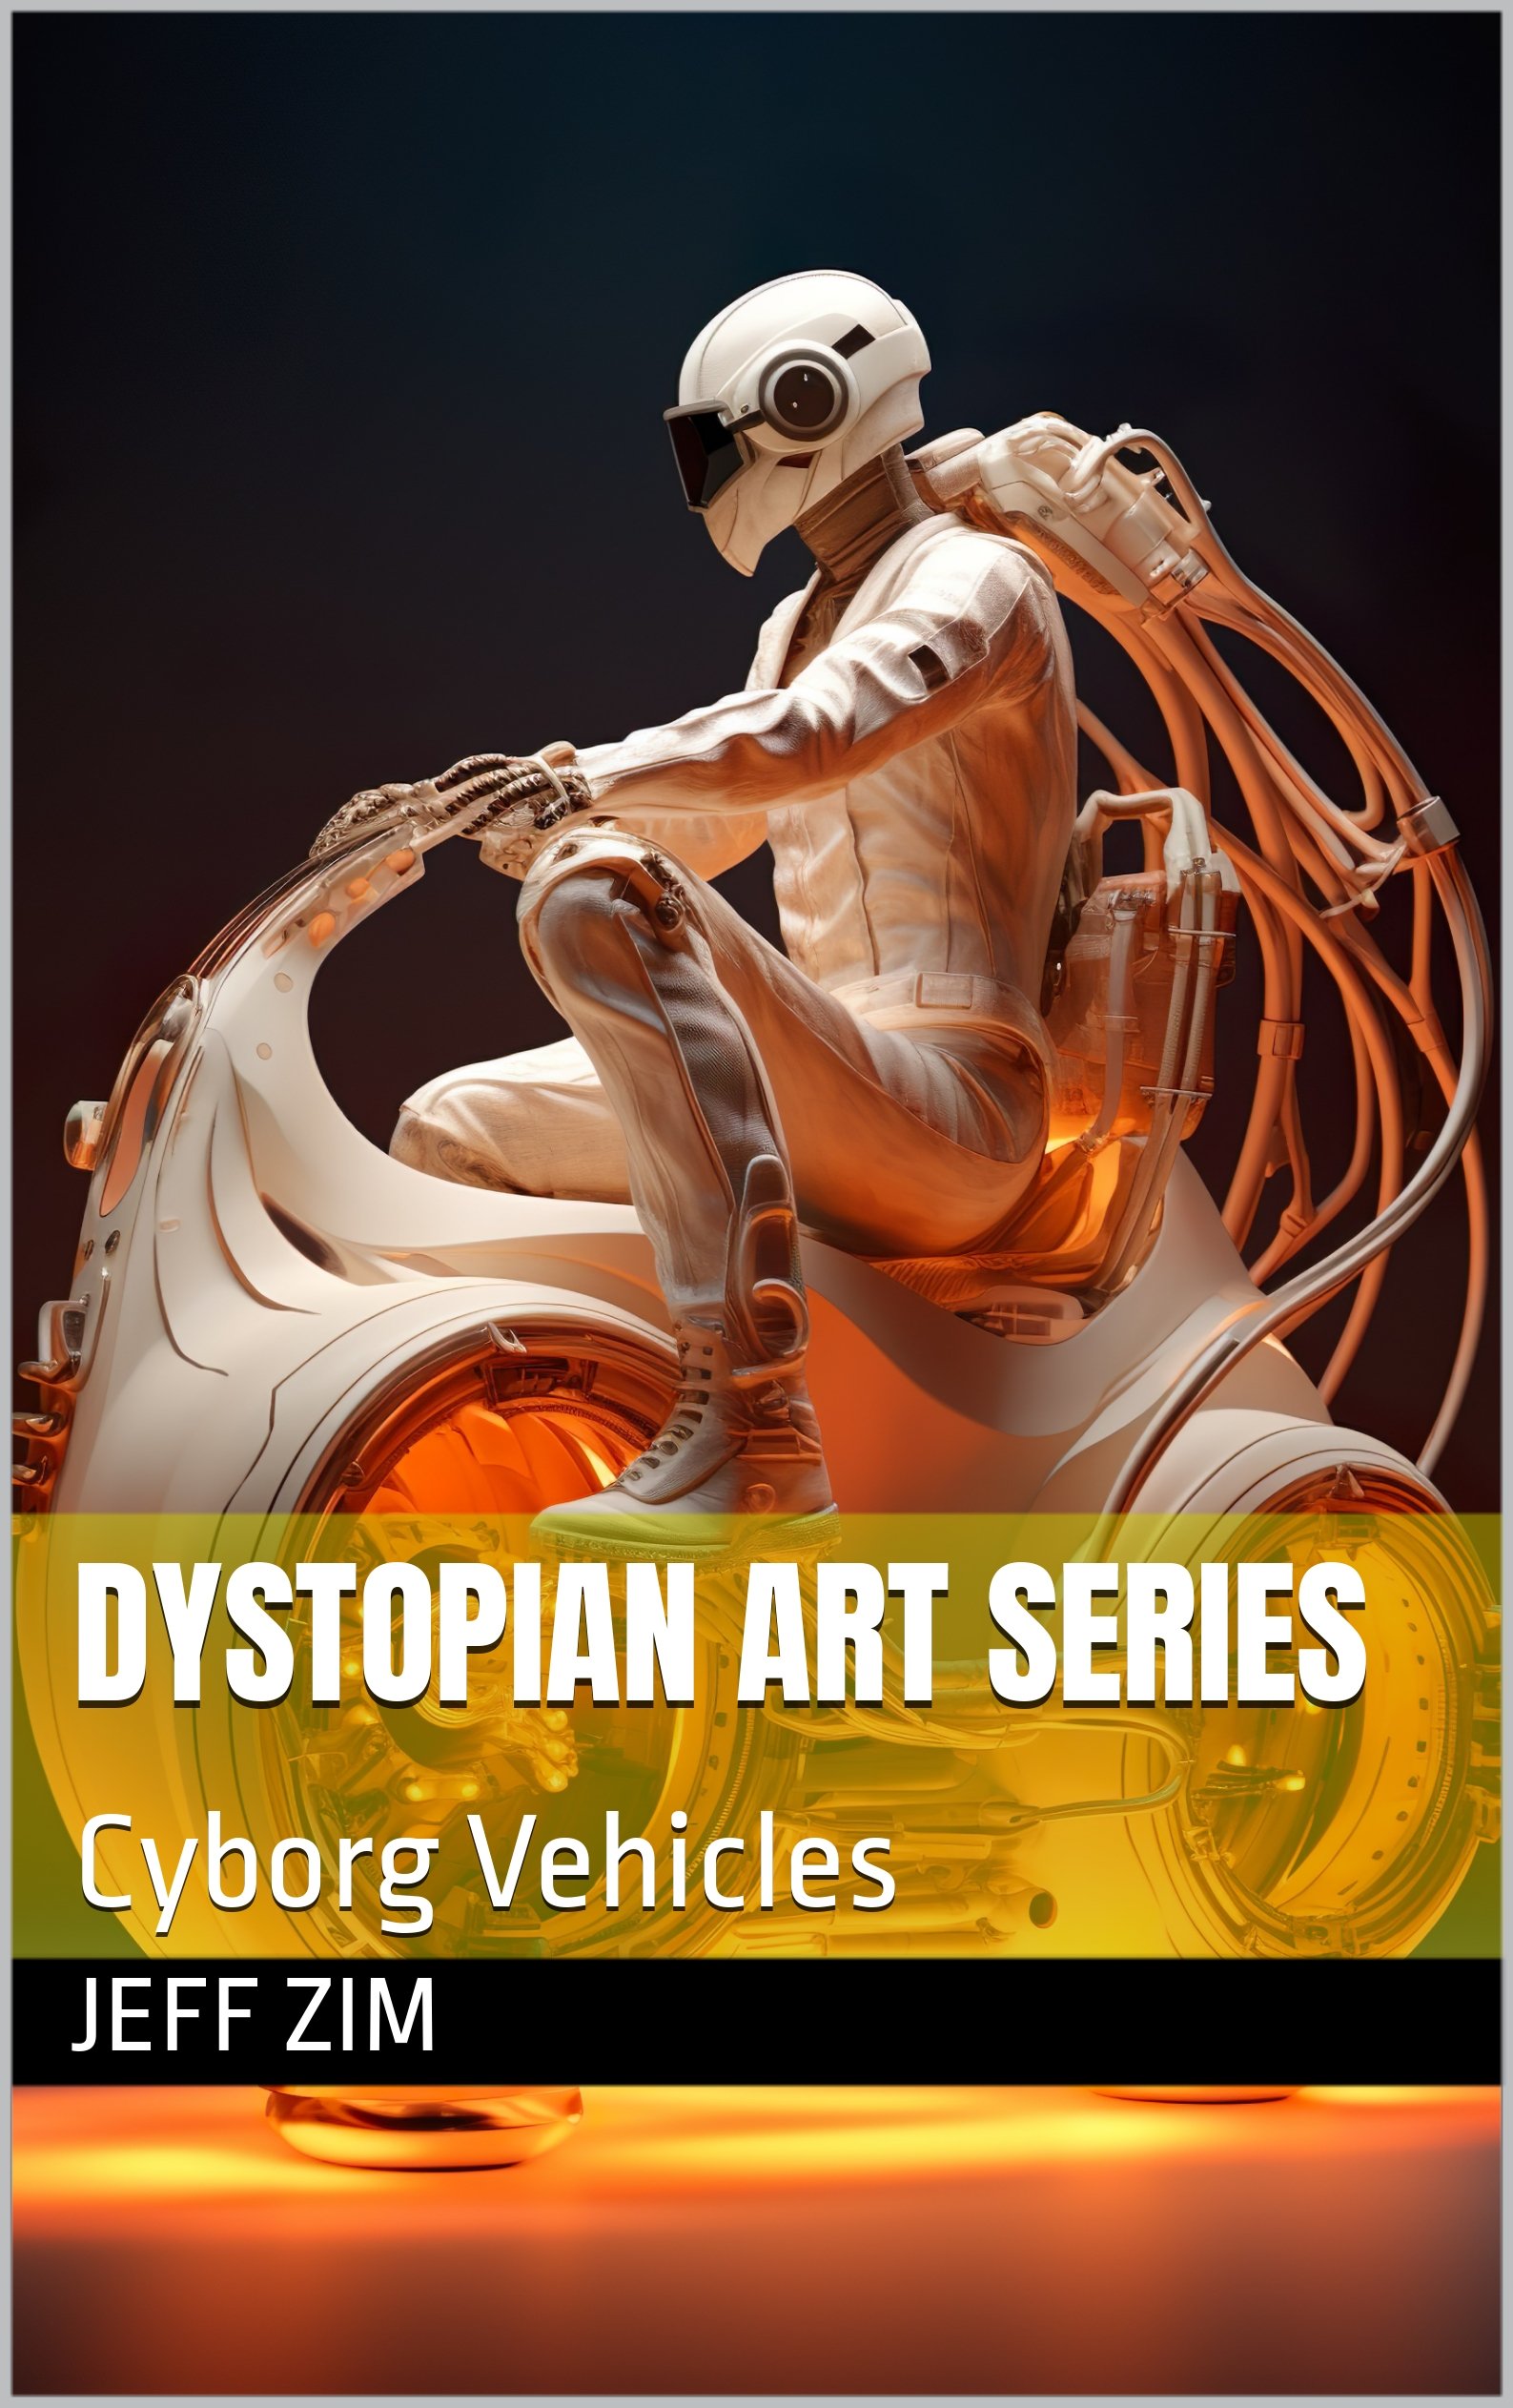 Dystopian Art Series Cyborg Vehicles